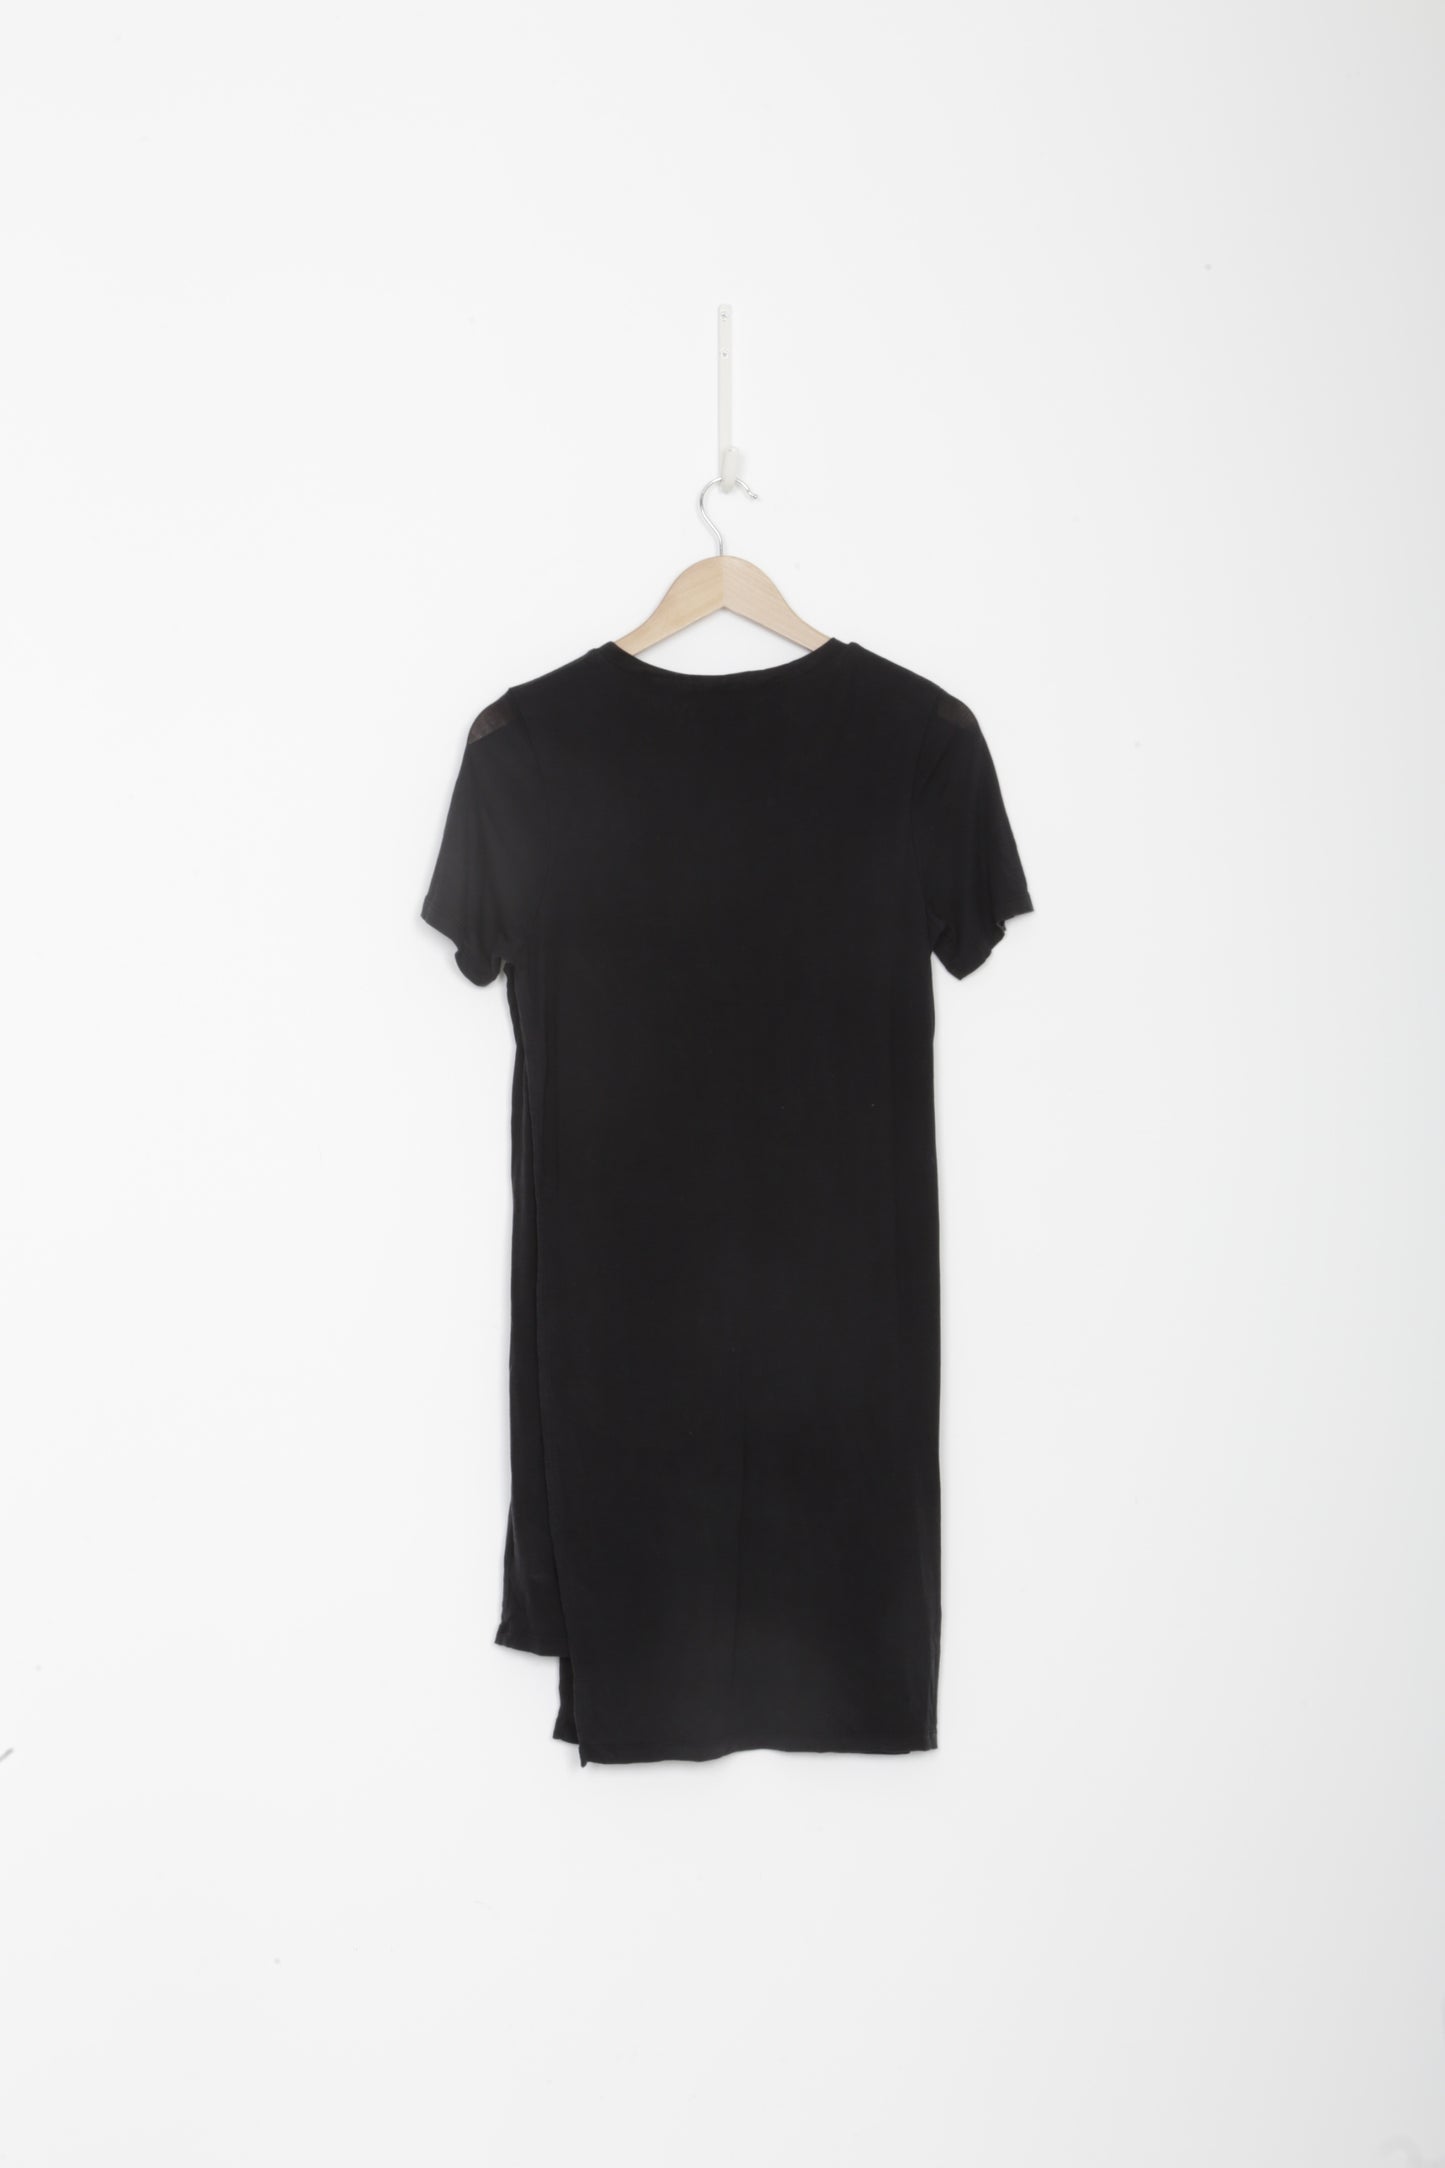 Acne Studios Womens Black Dress Size S